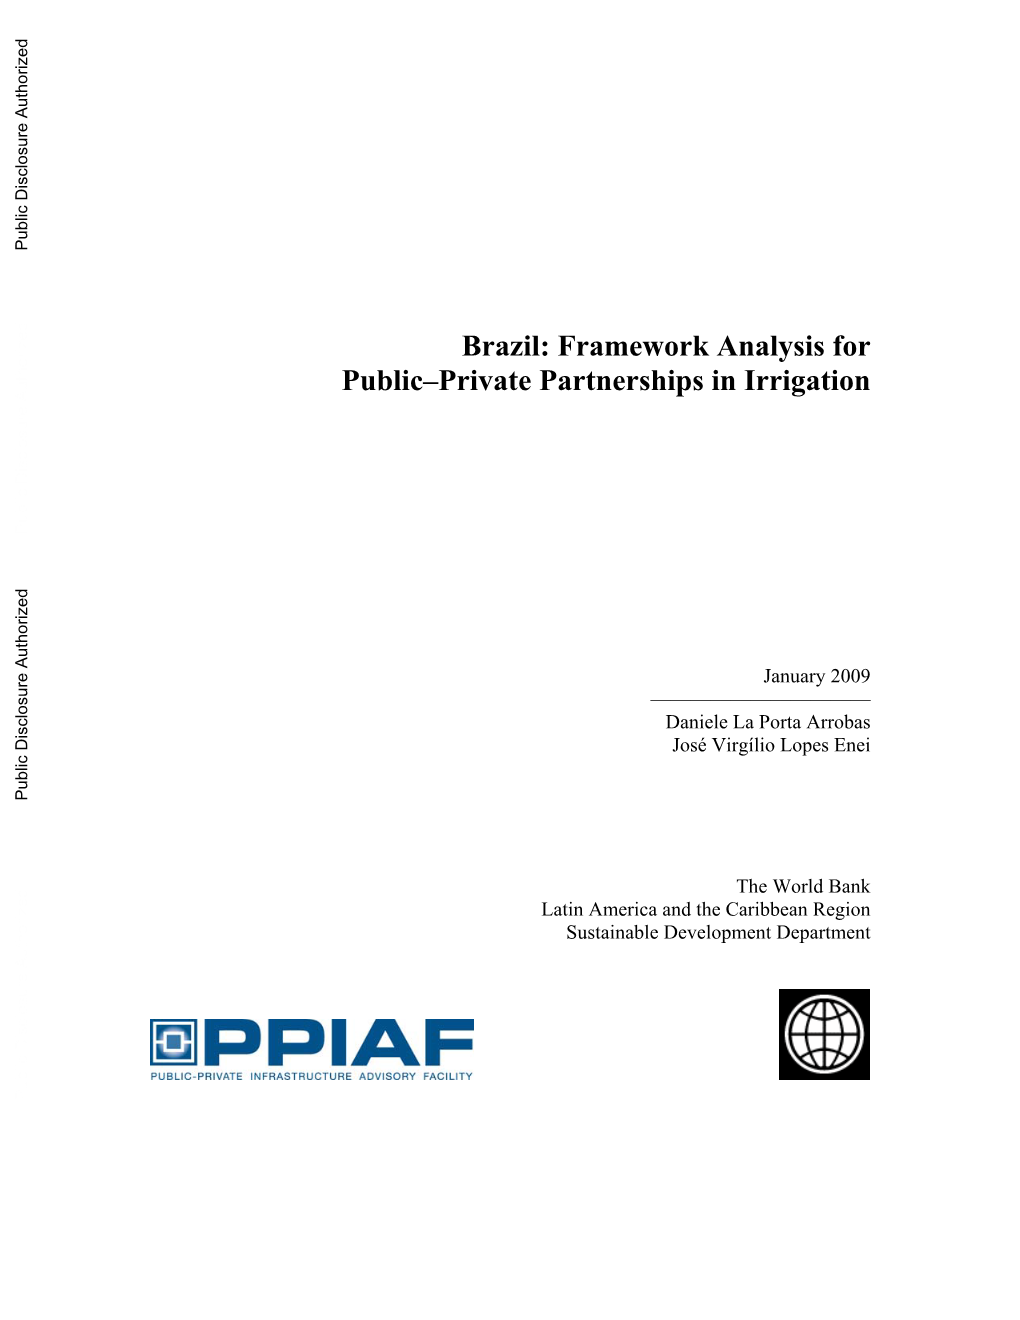 Brazil: Framework Analysis for Public–Private Partnerships in Irrigation